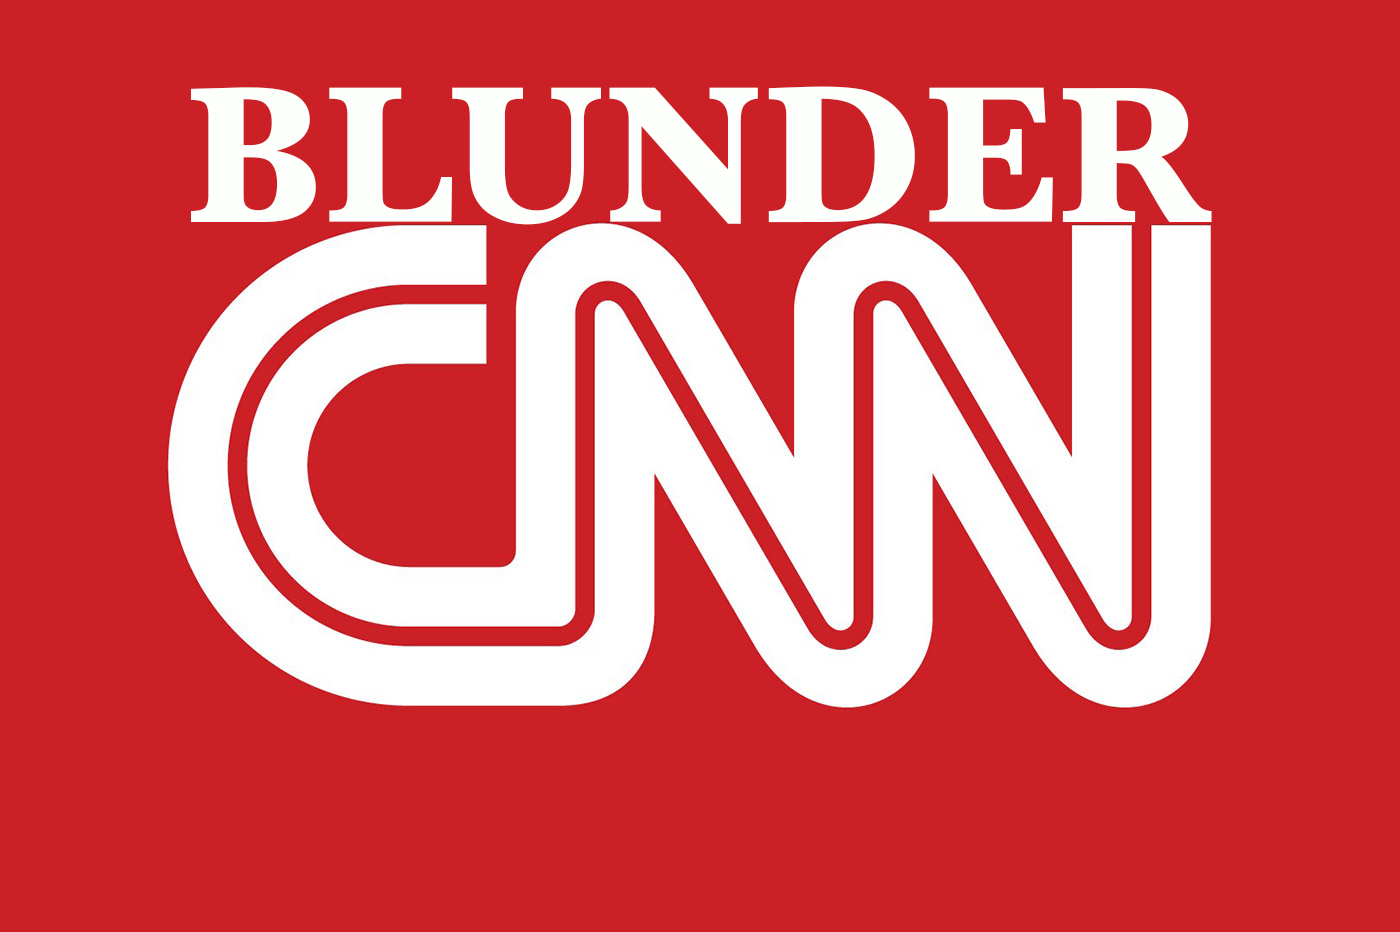 The Latest Blunder by CNN